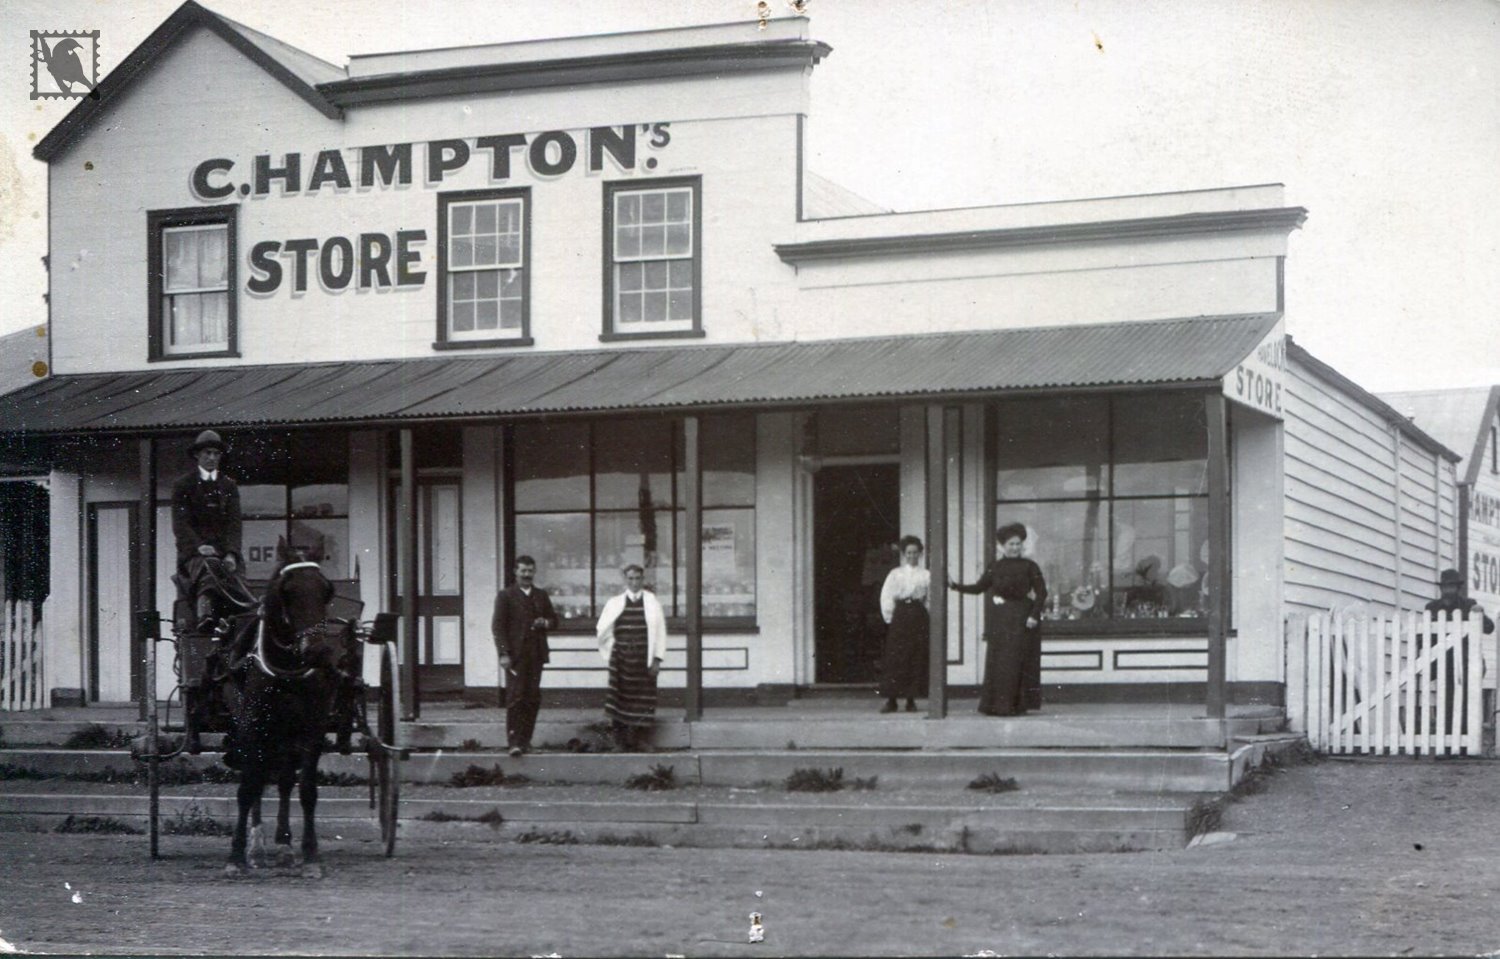 C.Hampton's Store Havelock